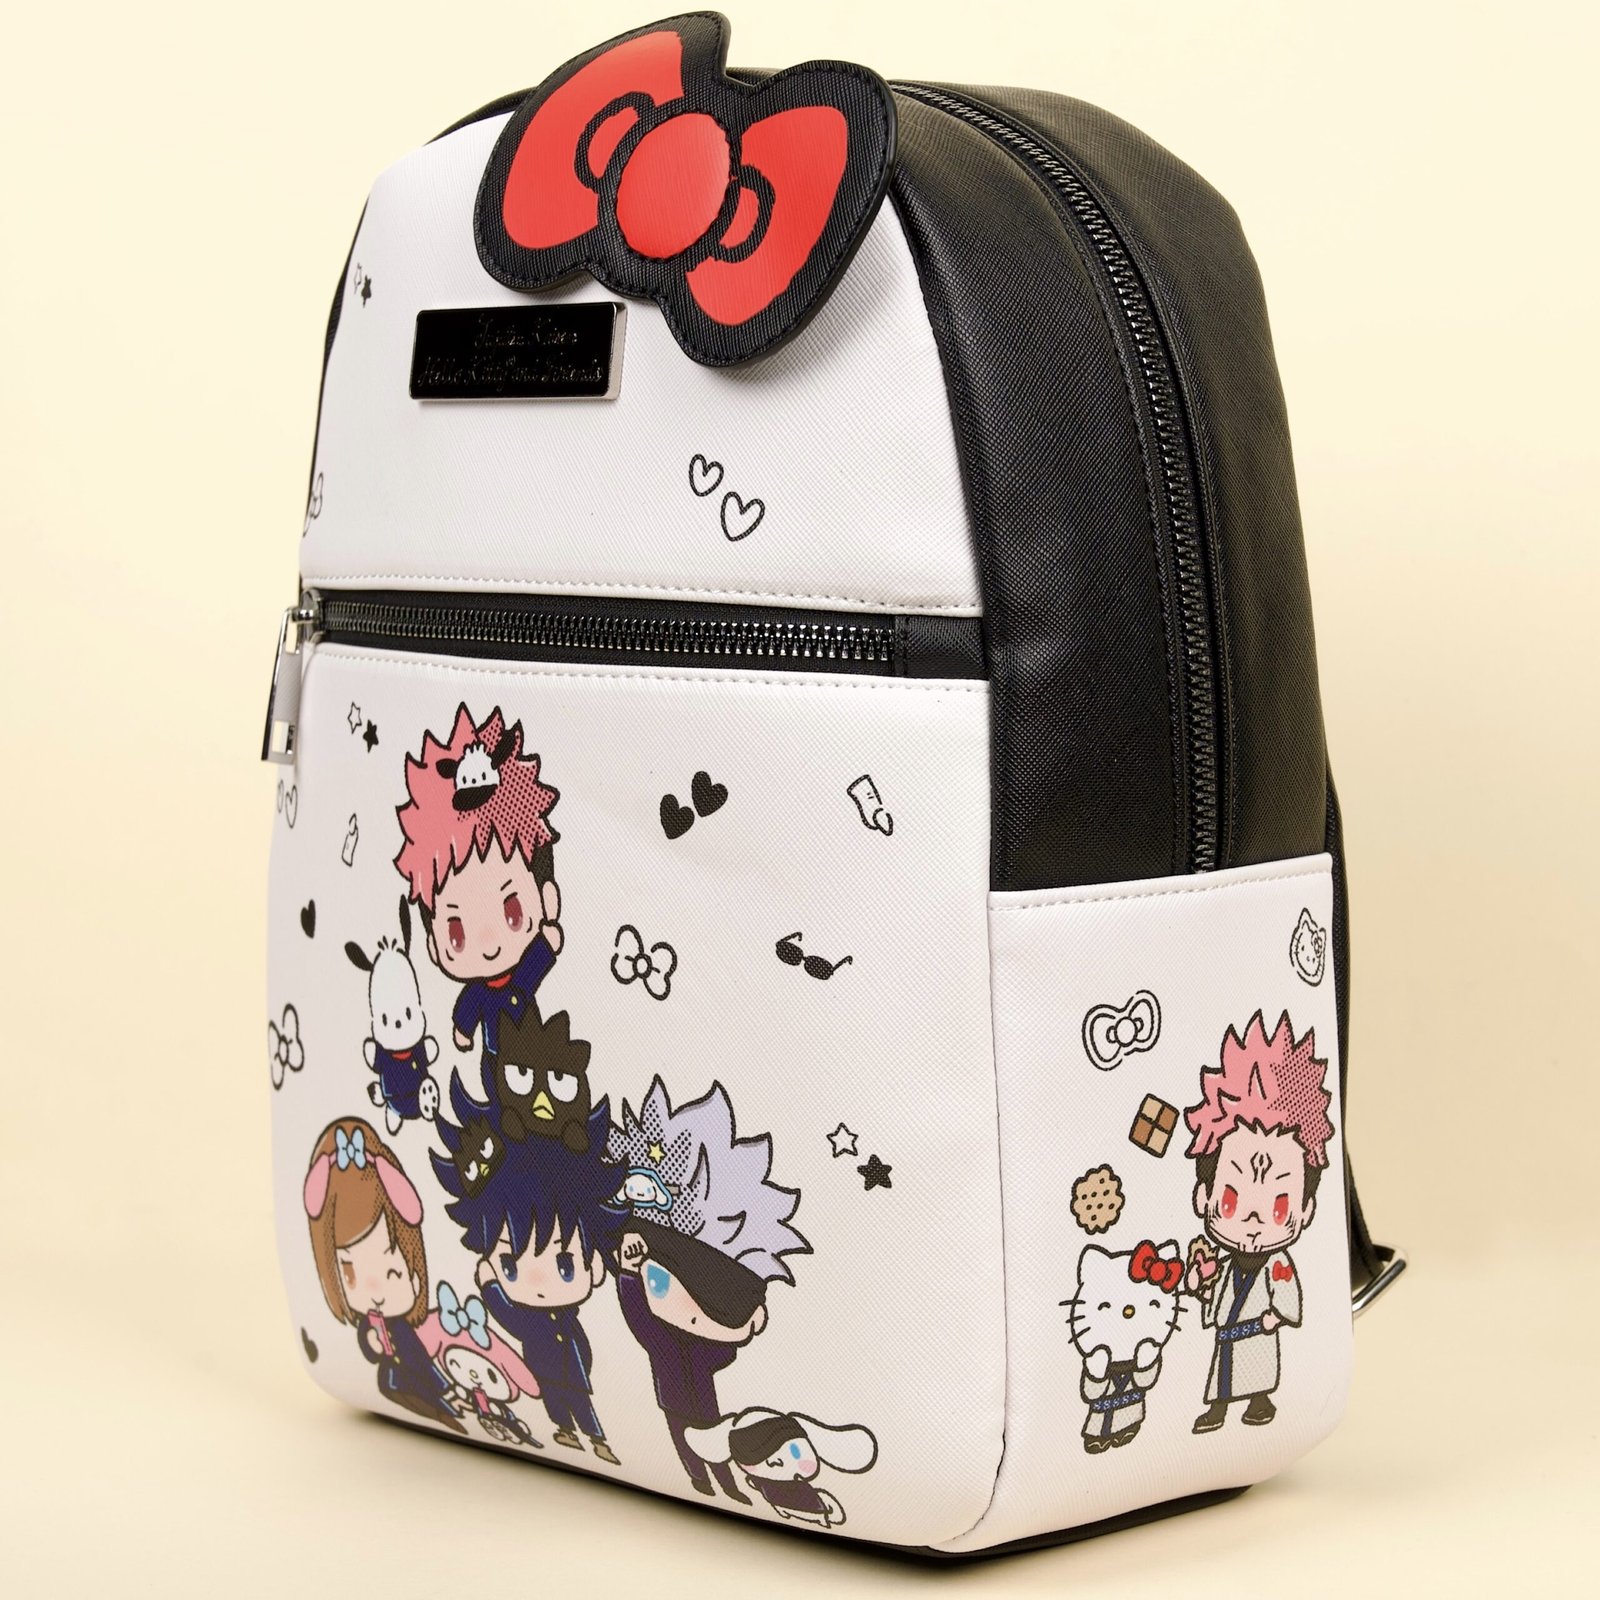 Jujutsu Kaisen X Hello Kitty And Friends Mini Backpack – Nabillera